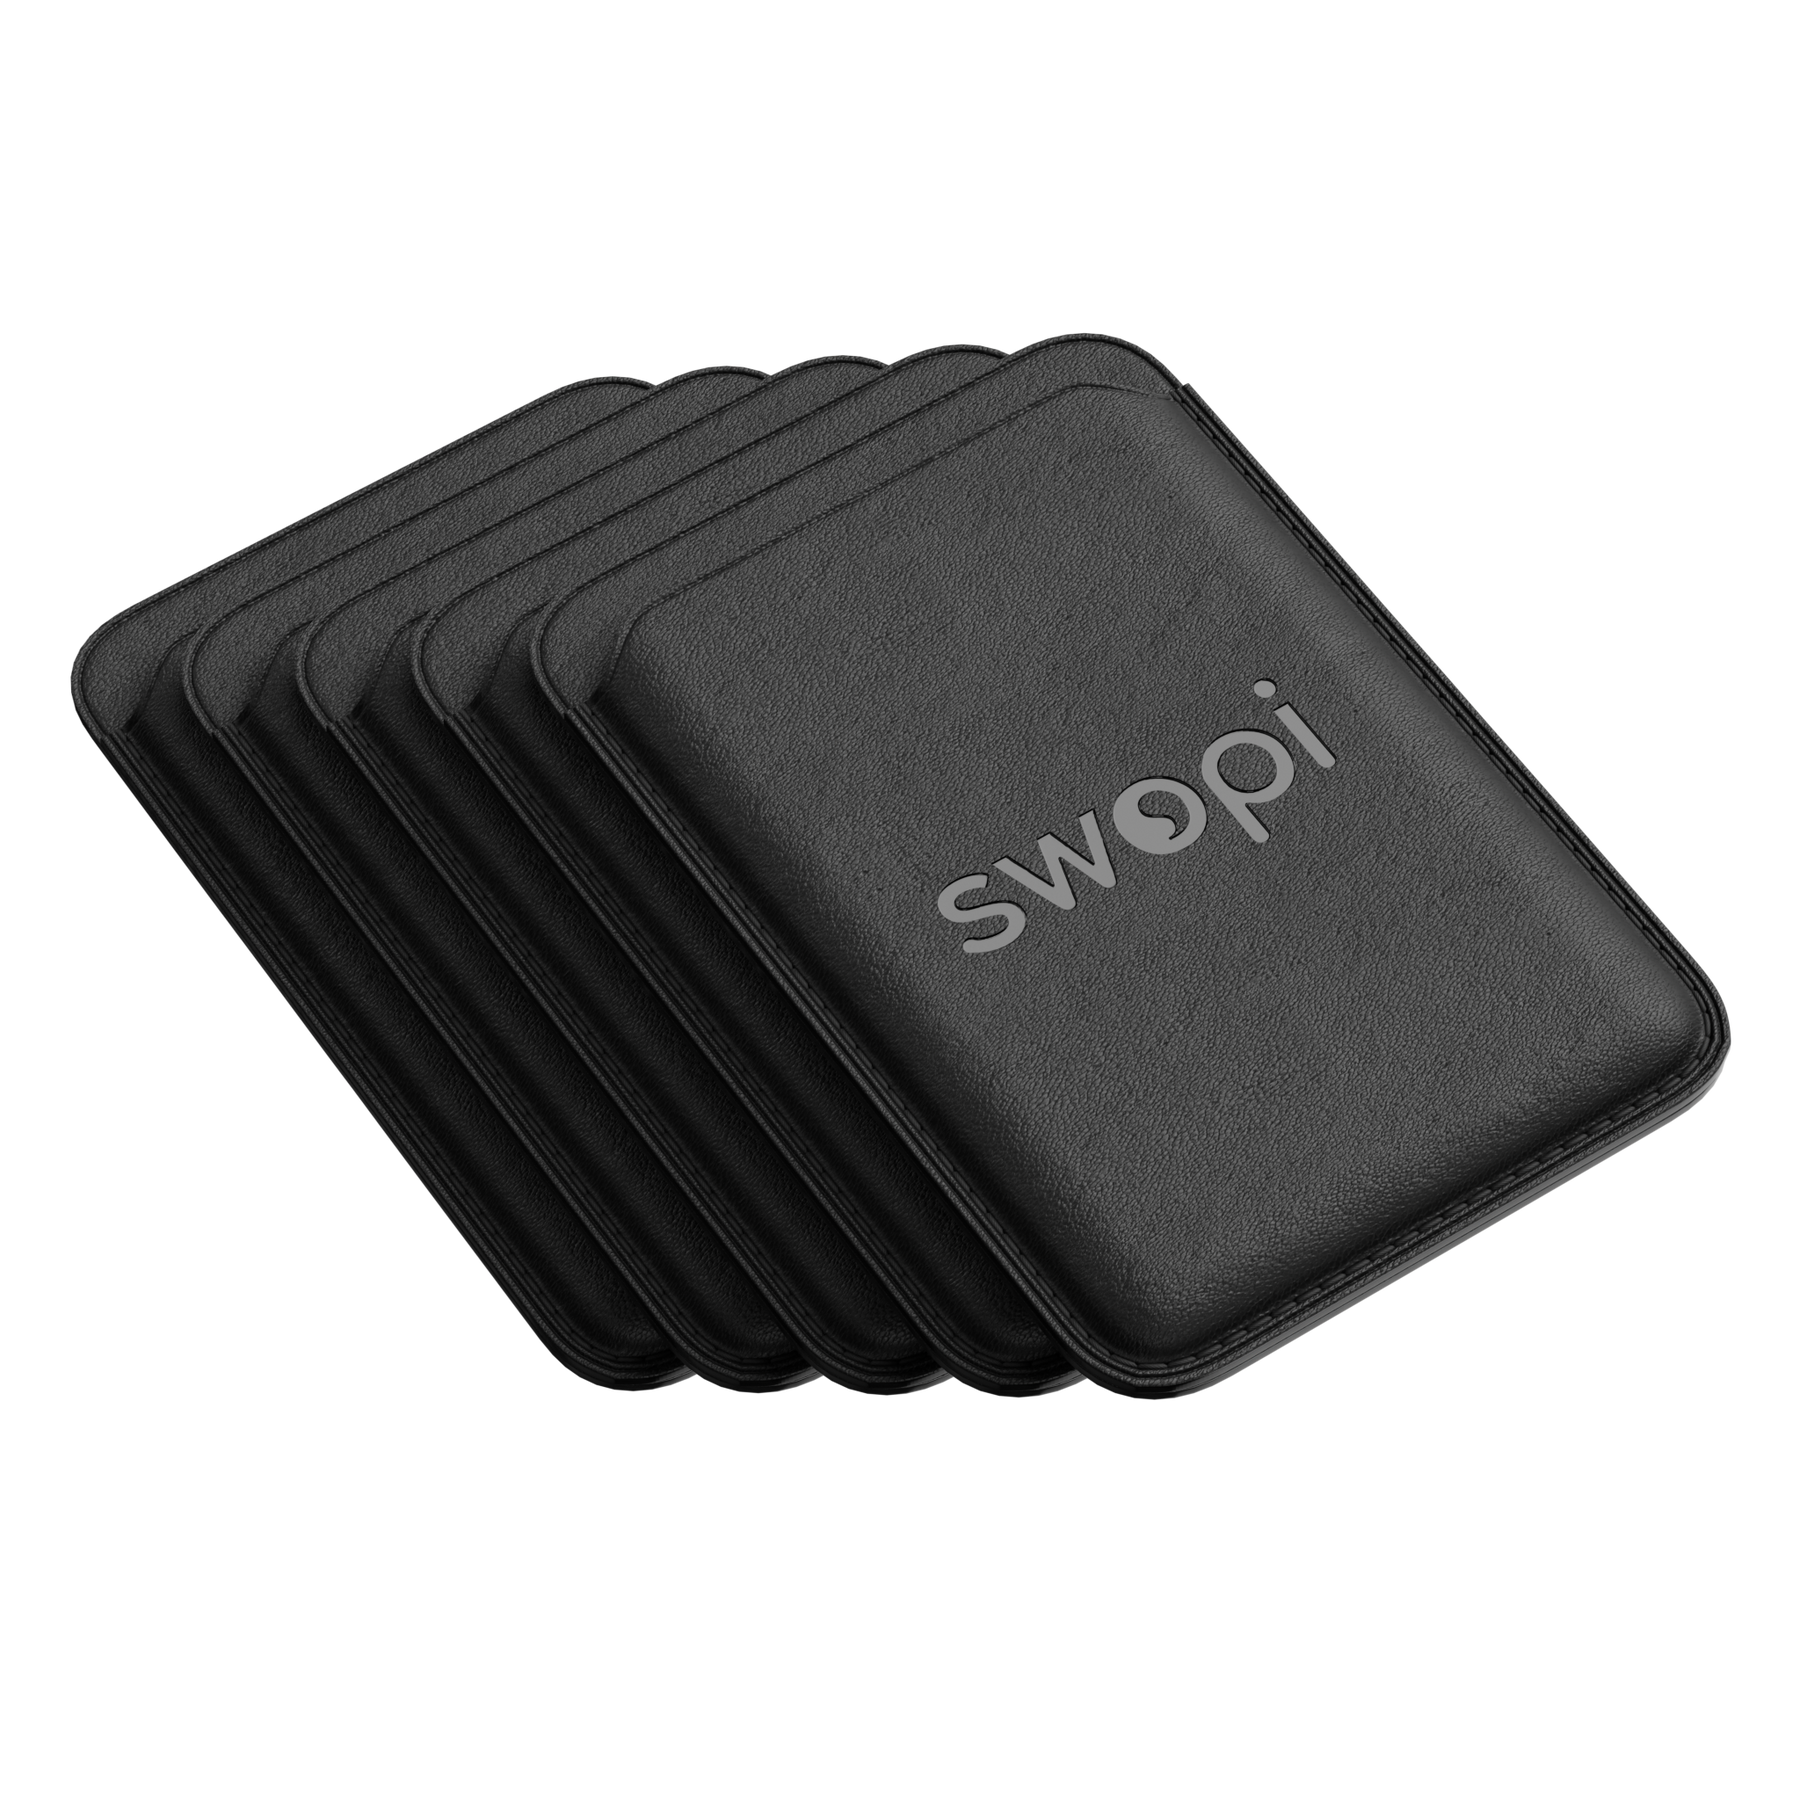 Swopi Leather Wallet 5 pack